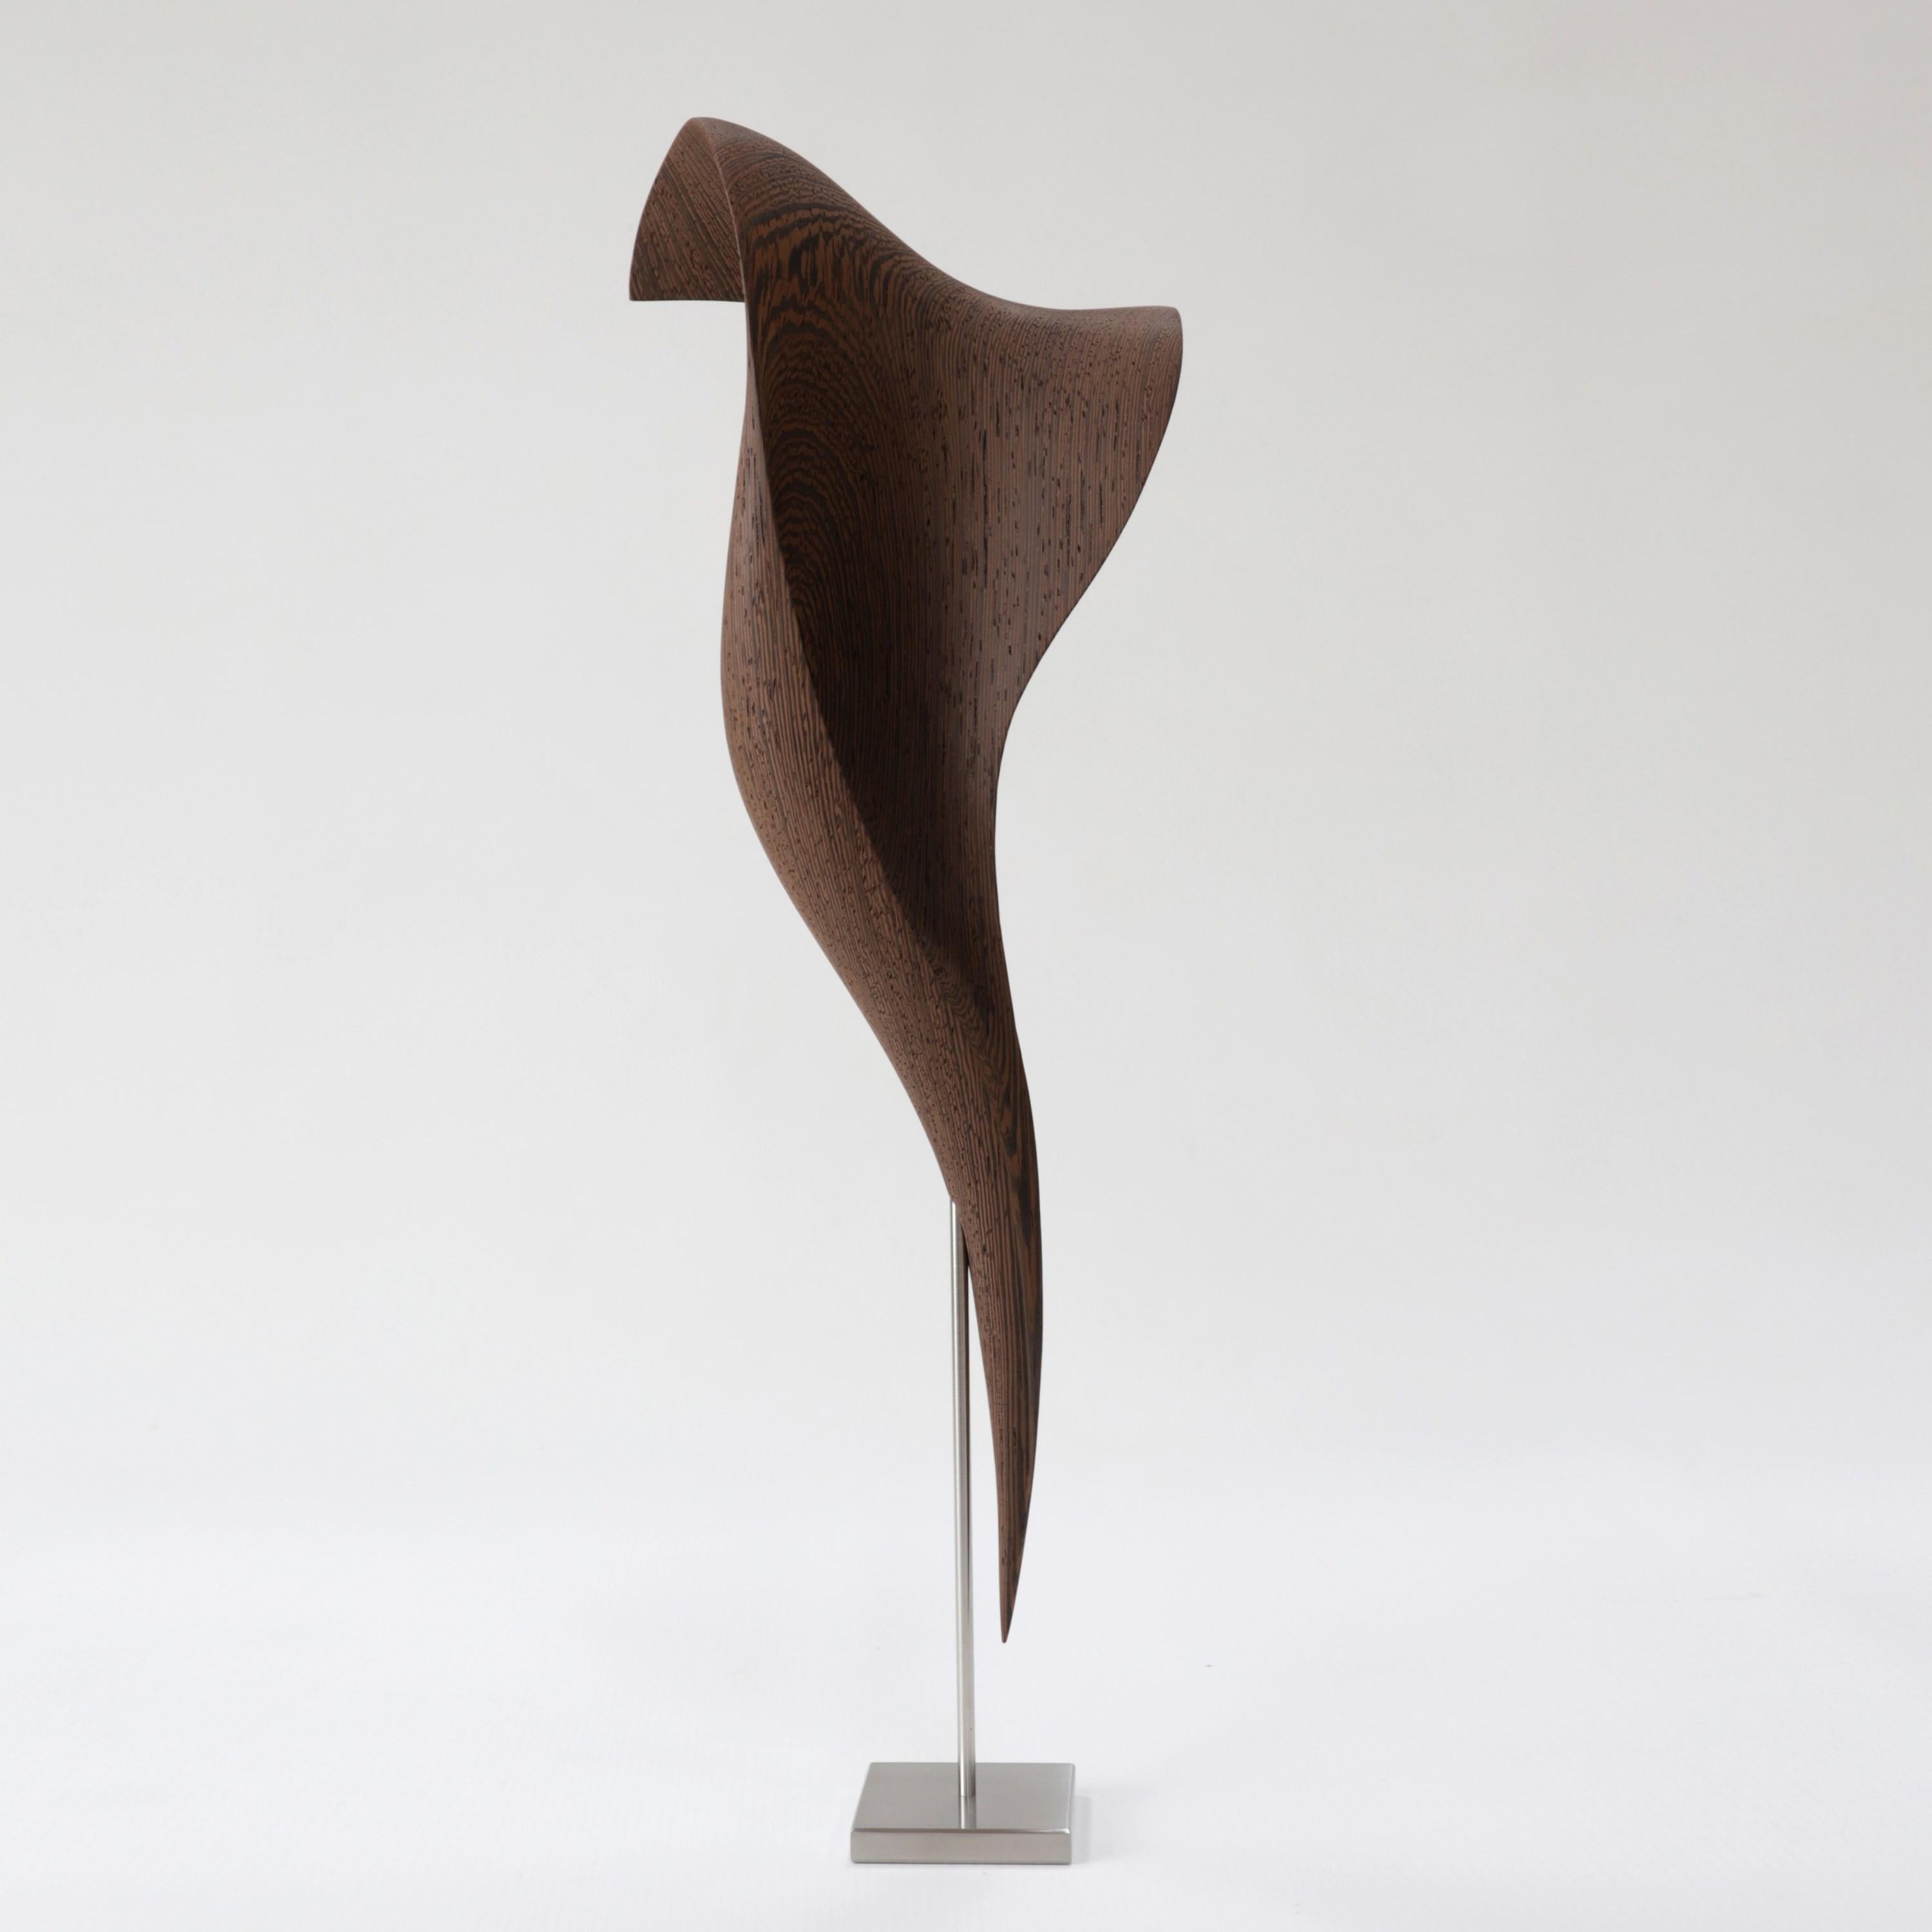 Wenge Flow Petit No 3, an Abstract Wooden Sculpture by the Danish Studio Egeværk